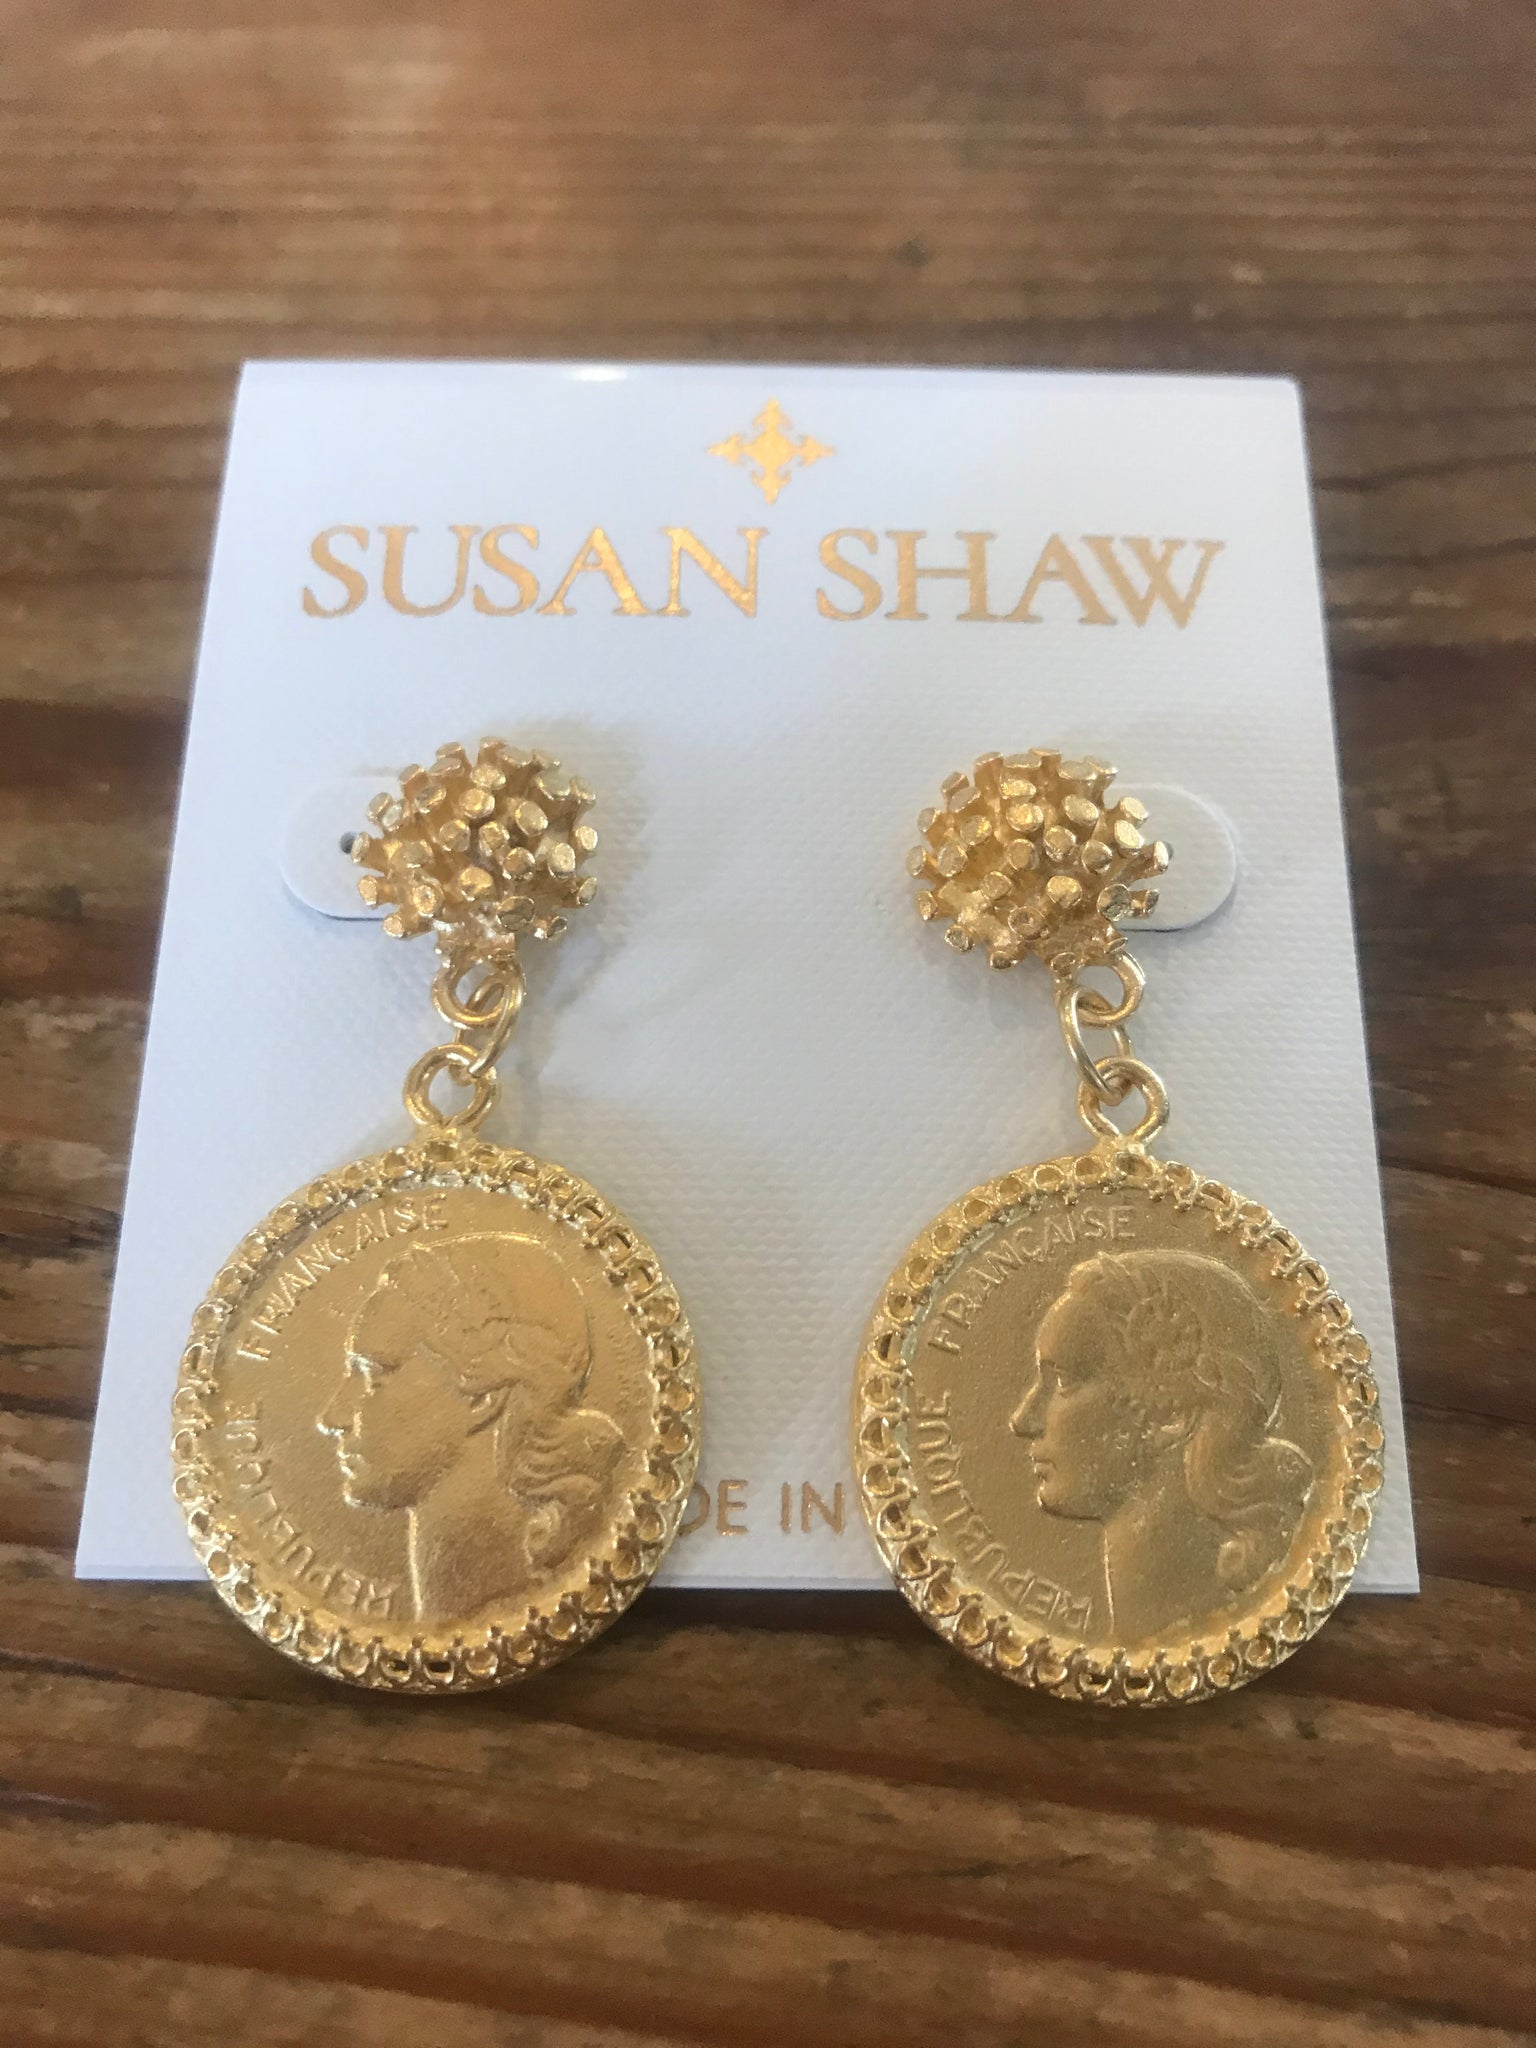 Susan Shaw 1536 Gold Coin Earrings